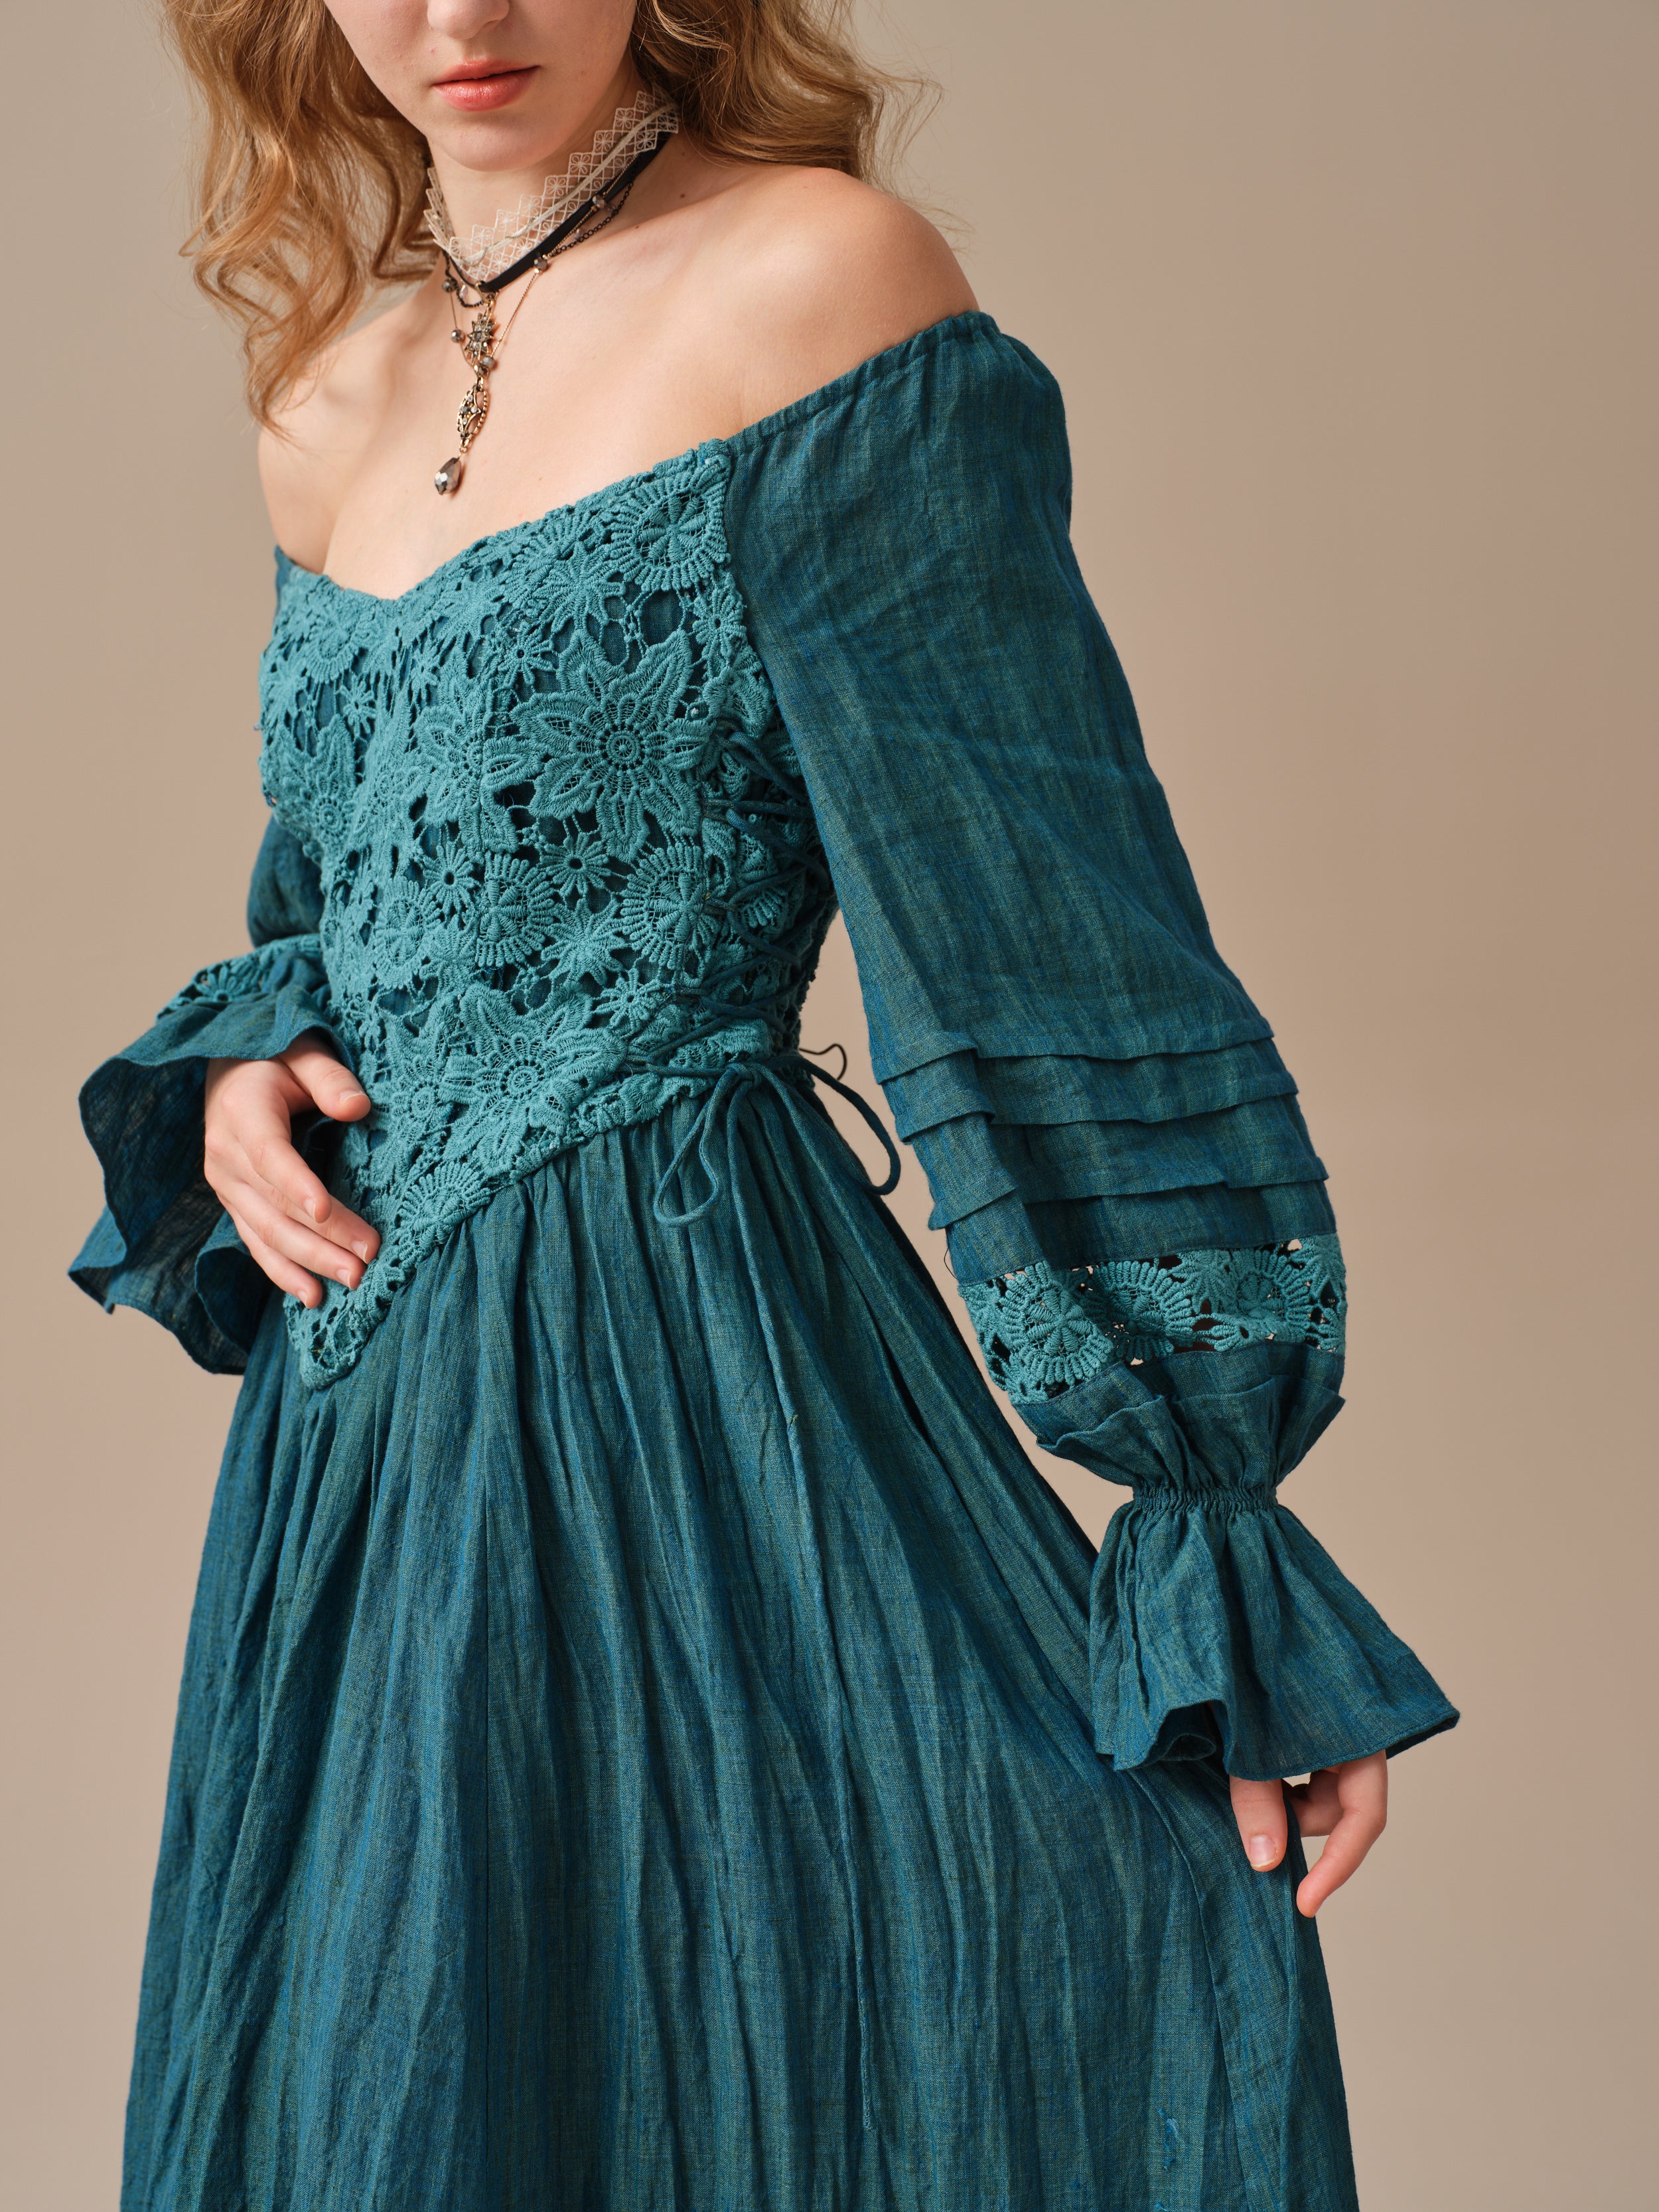 Winter Fairy Core Picks: Featured Fairy Lace Linen Dresses! – Linennaive